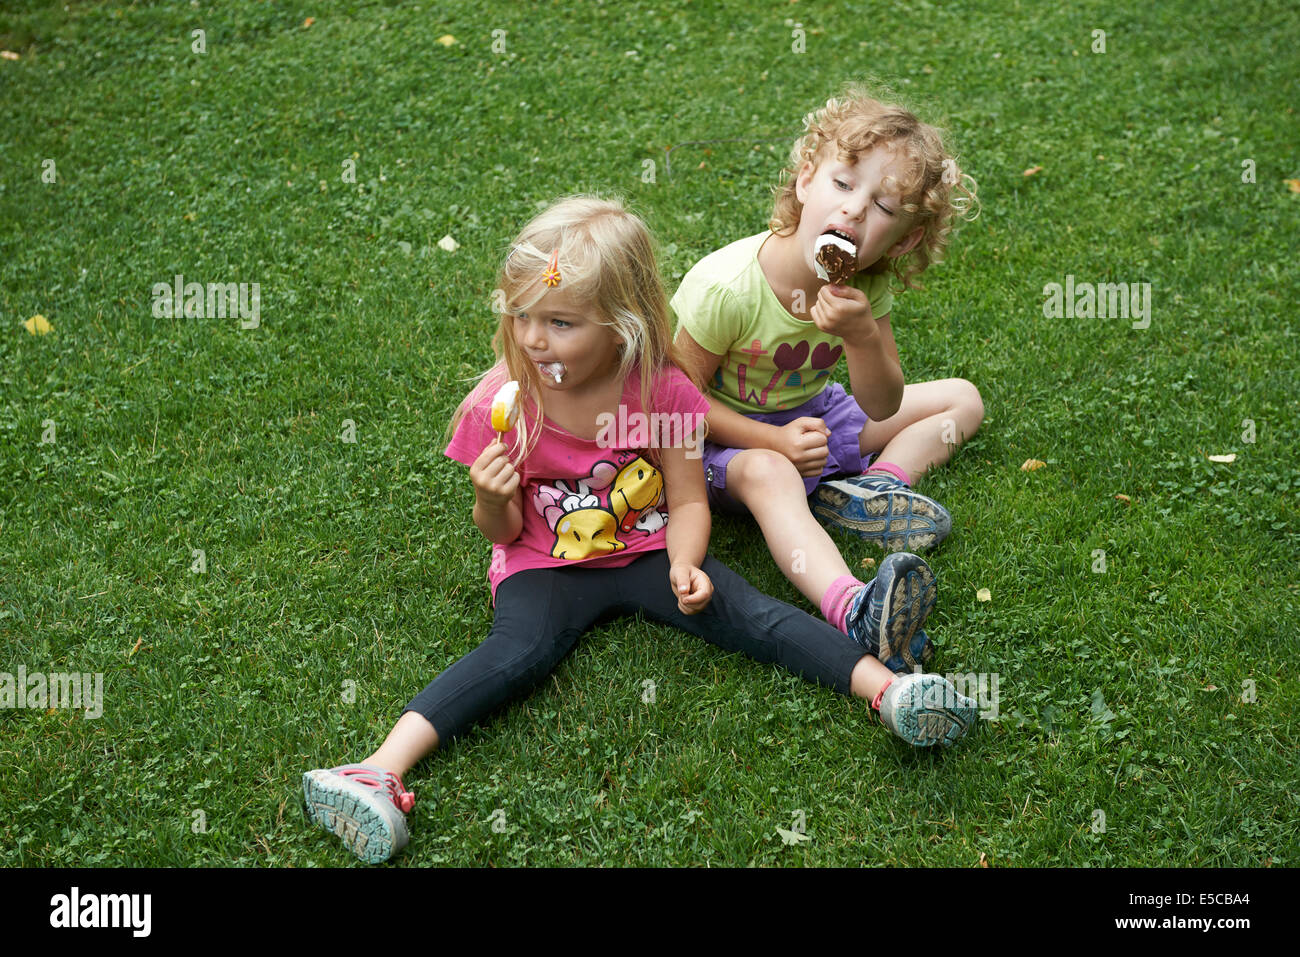 Children blond girls eating ice cream cones sitting on grass lawn, summertime Stock Photo